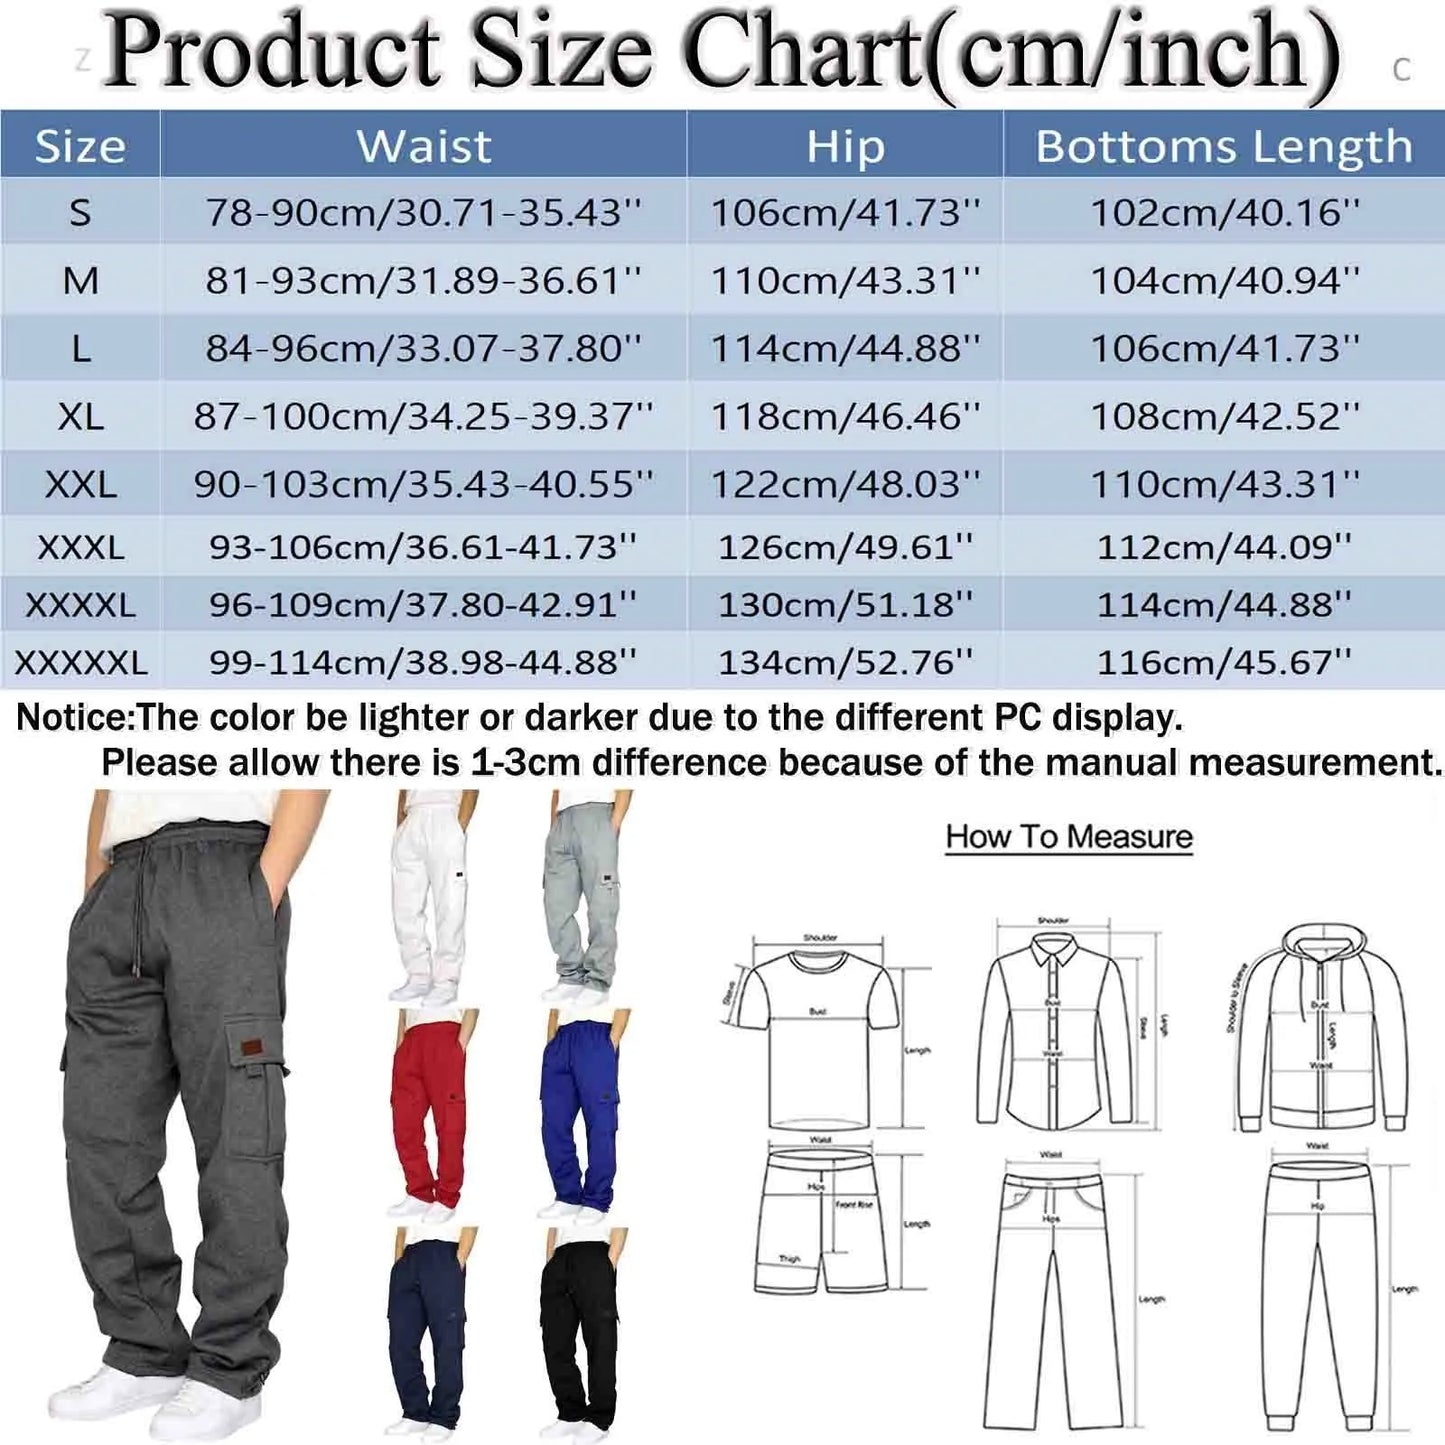 Sweatpants Men's Cargo Pants Drawstring/Elastic Waist Trousers Male Joggers Sports Trousers